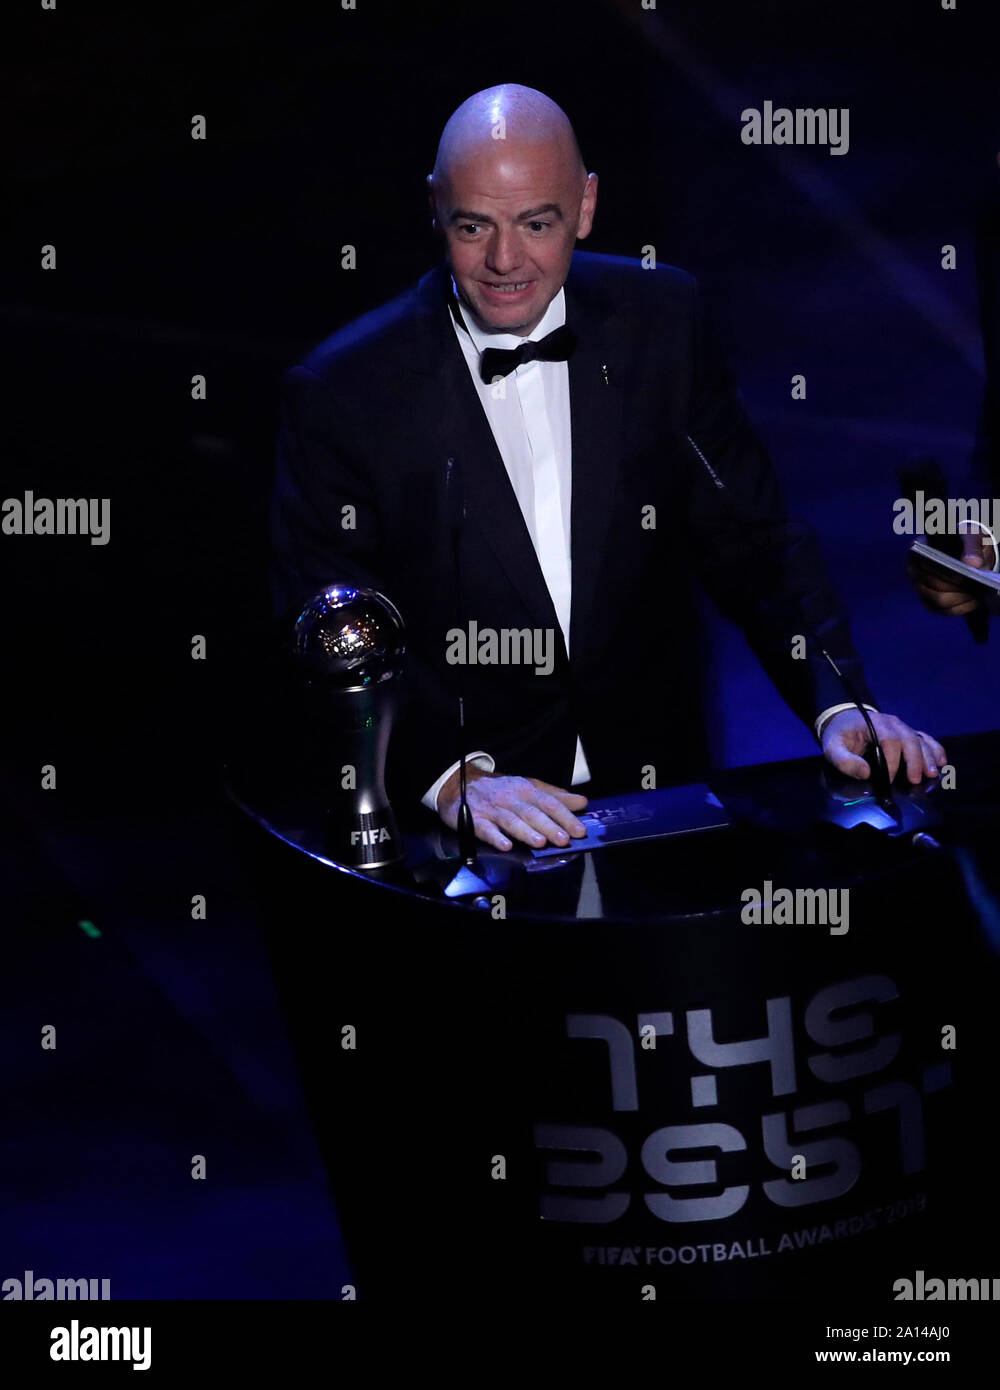 Mailand, Italien. 23 Sep, 2019. FIFA-Präsident Gianni Infantino spricht während der beste FIFA Football Awards 2019 in Mailand, Italien, Sept. 23, 2019. Credit: Alberto Lingria/Xinhua Stockfoto